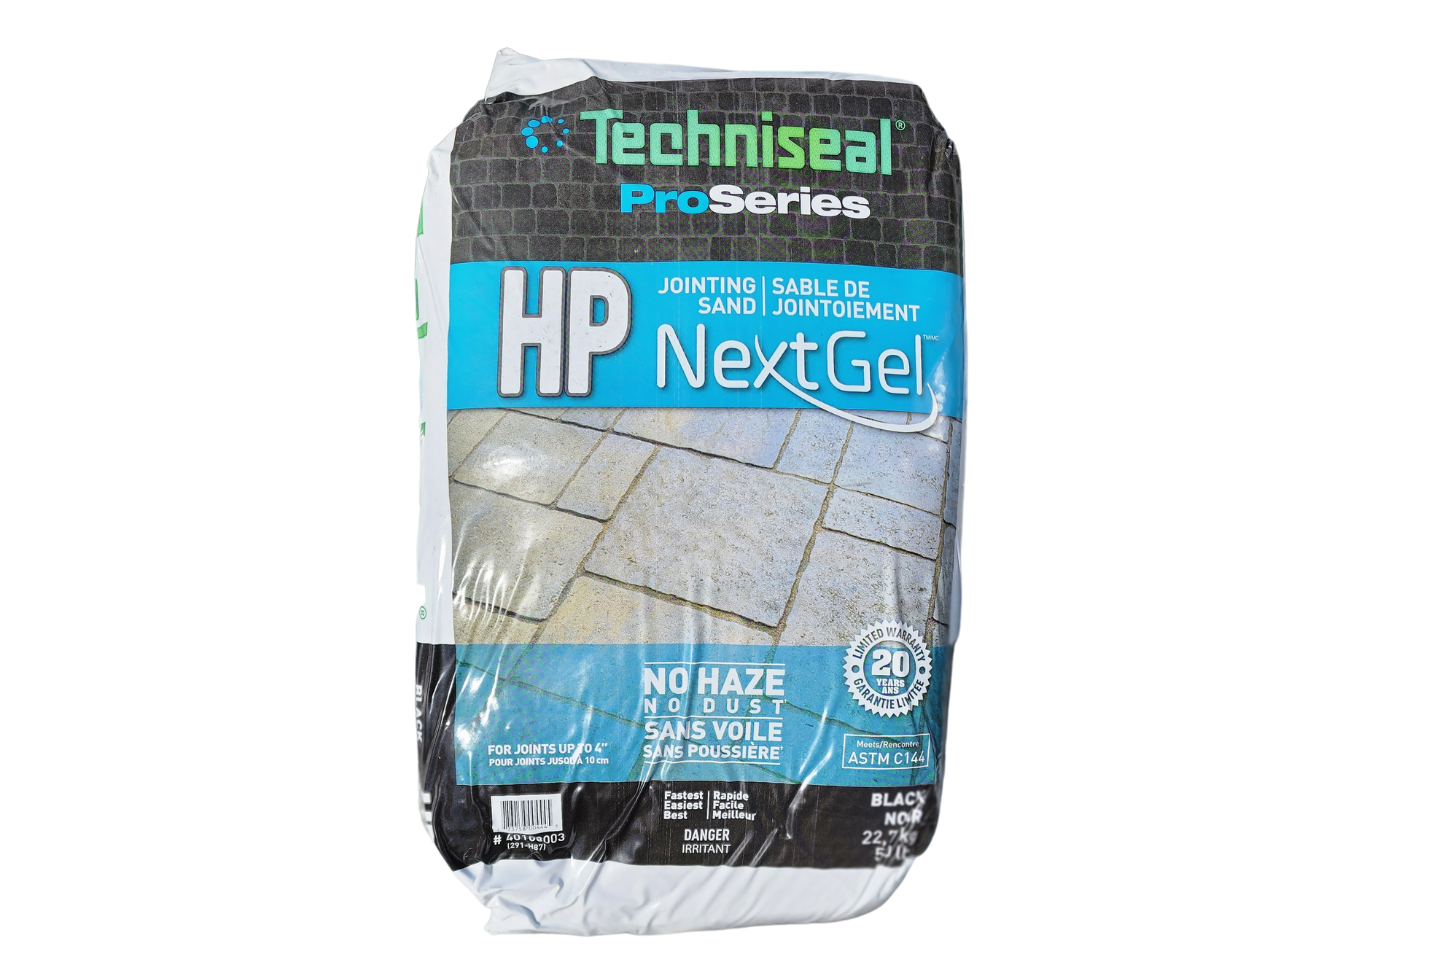 Techniseal Pros Series HP Next Gel Jointing Sand 50lb bag